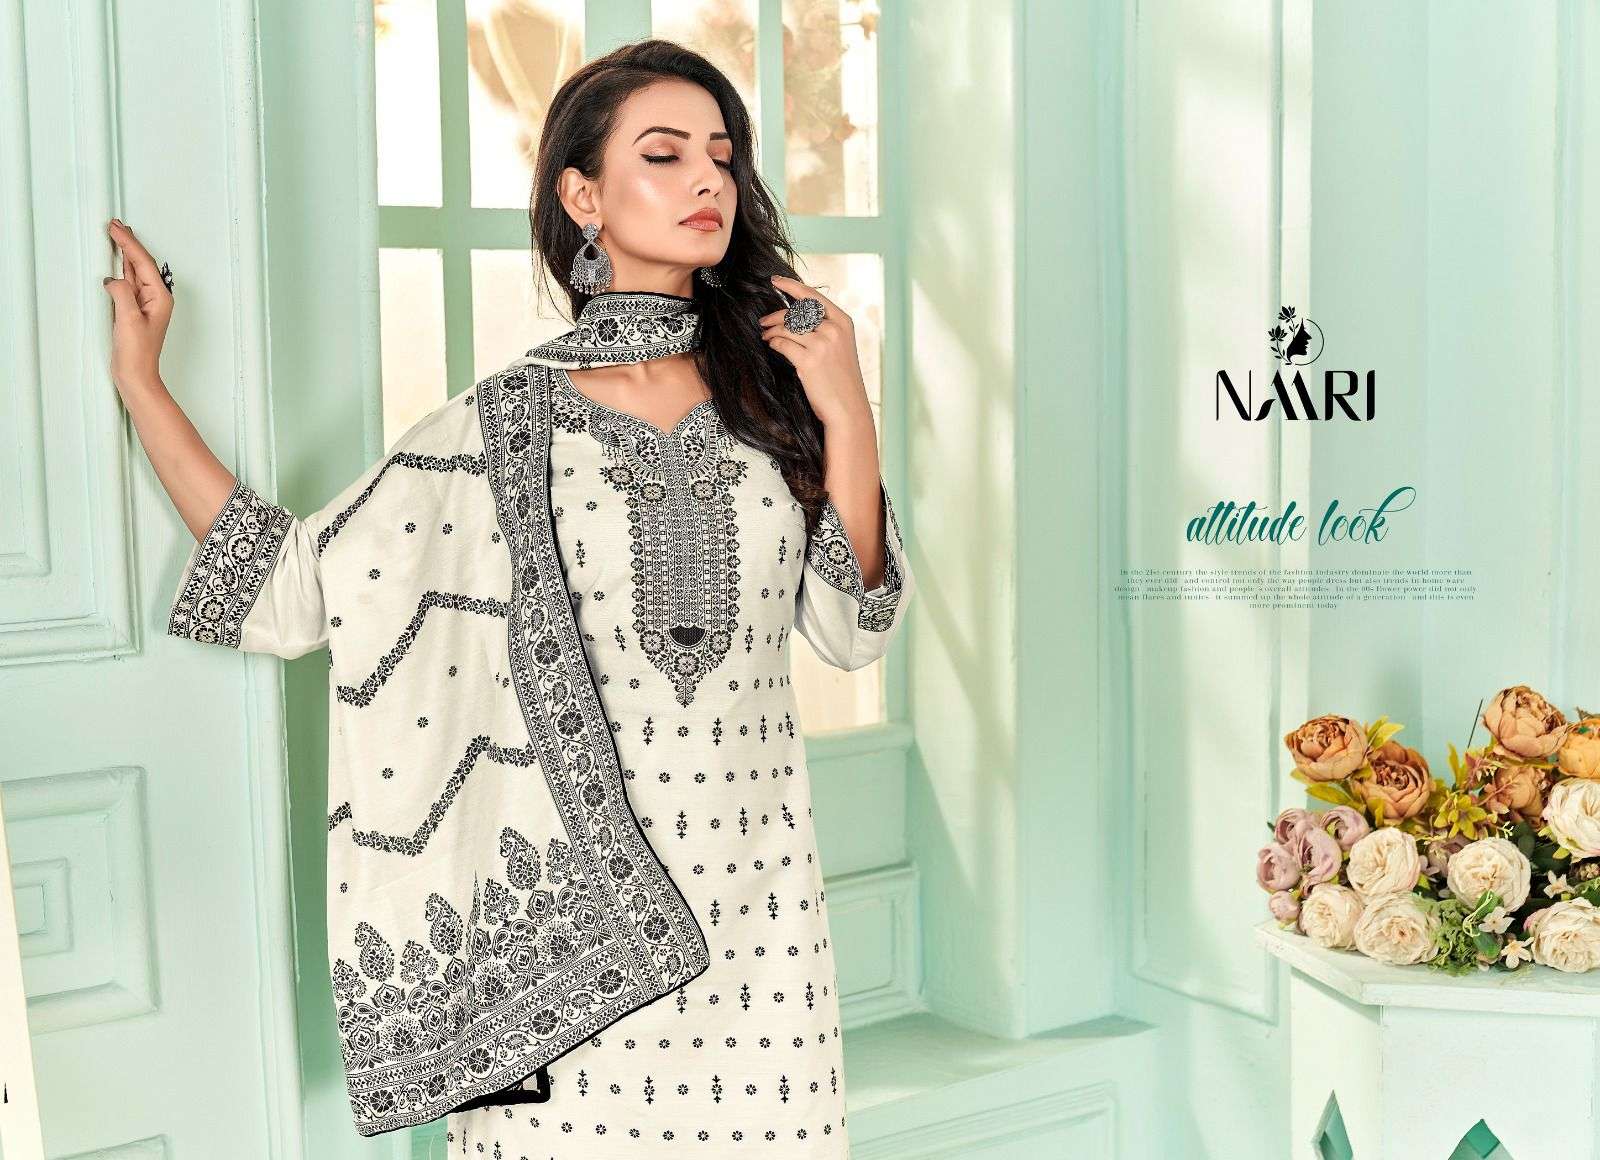 naari breez 9001-9003 series indian designer salwar suits catalogue collection 2023